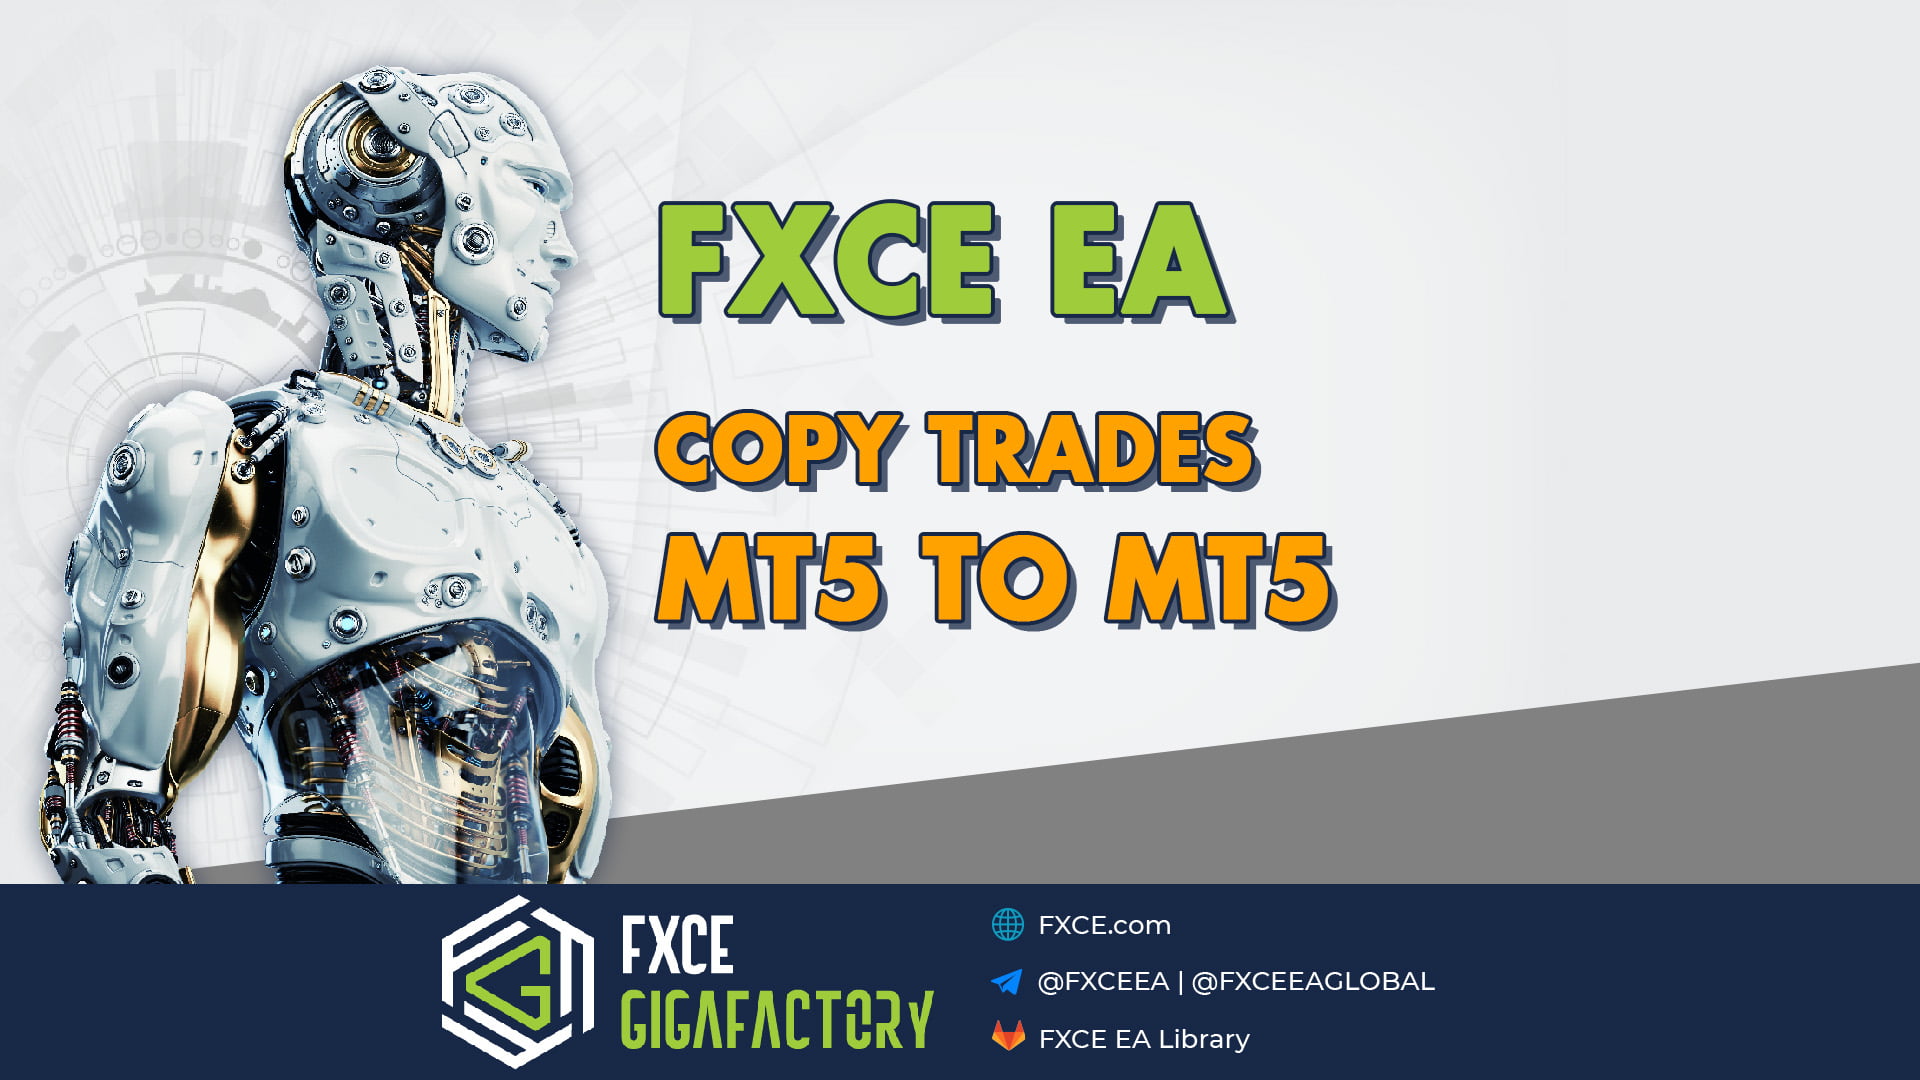 FXCE EA Copy Trades MT5 to MT5